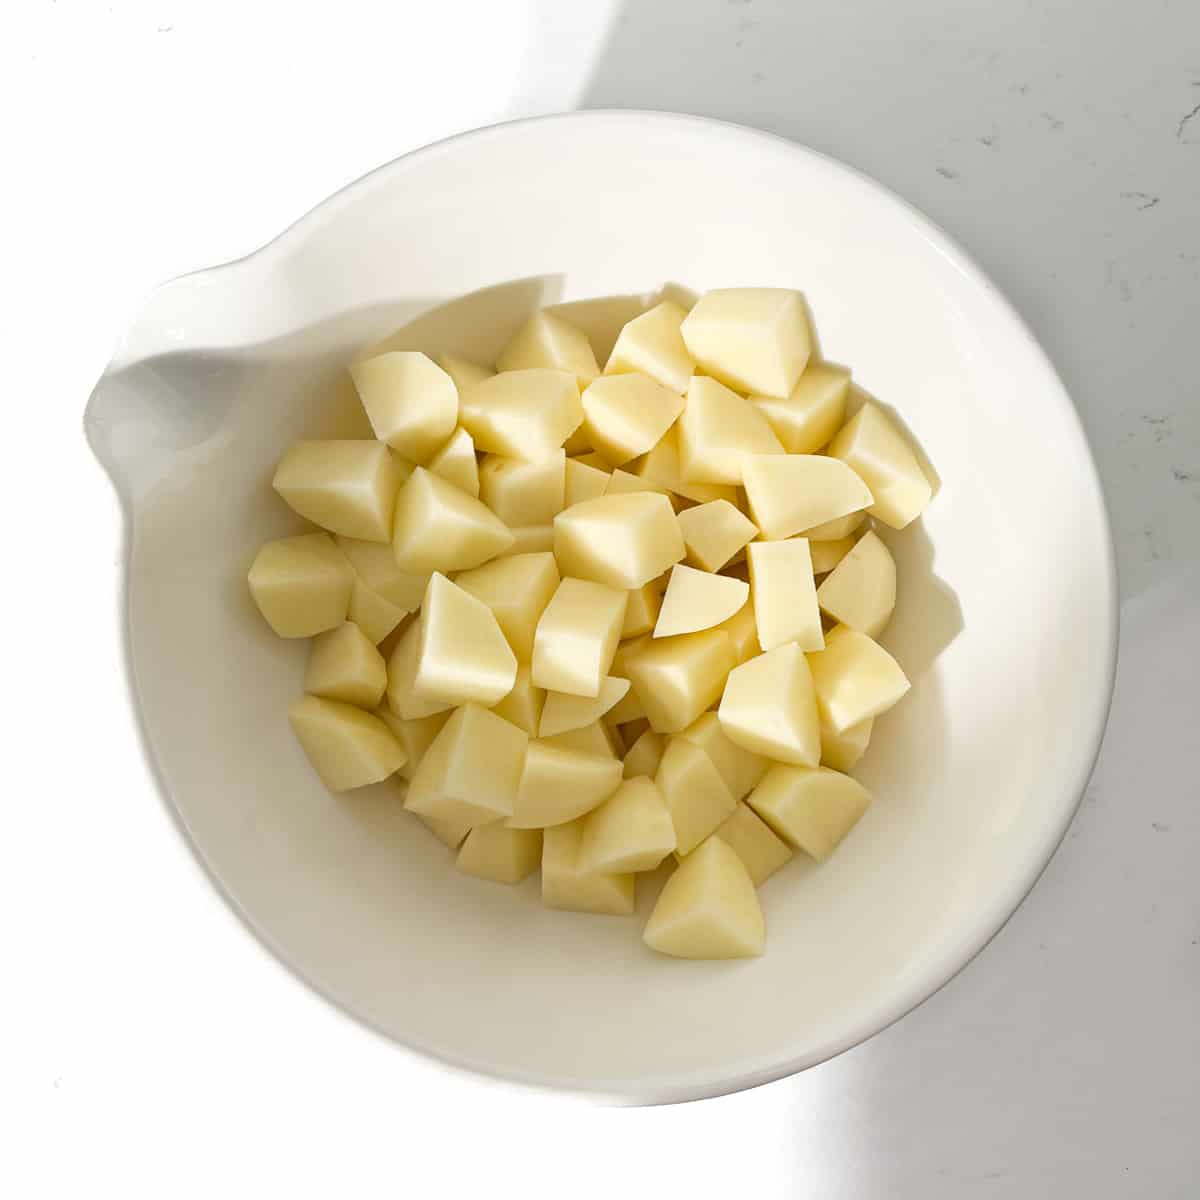 Potato cubes in a large white bowl.